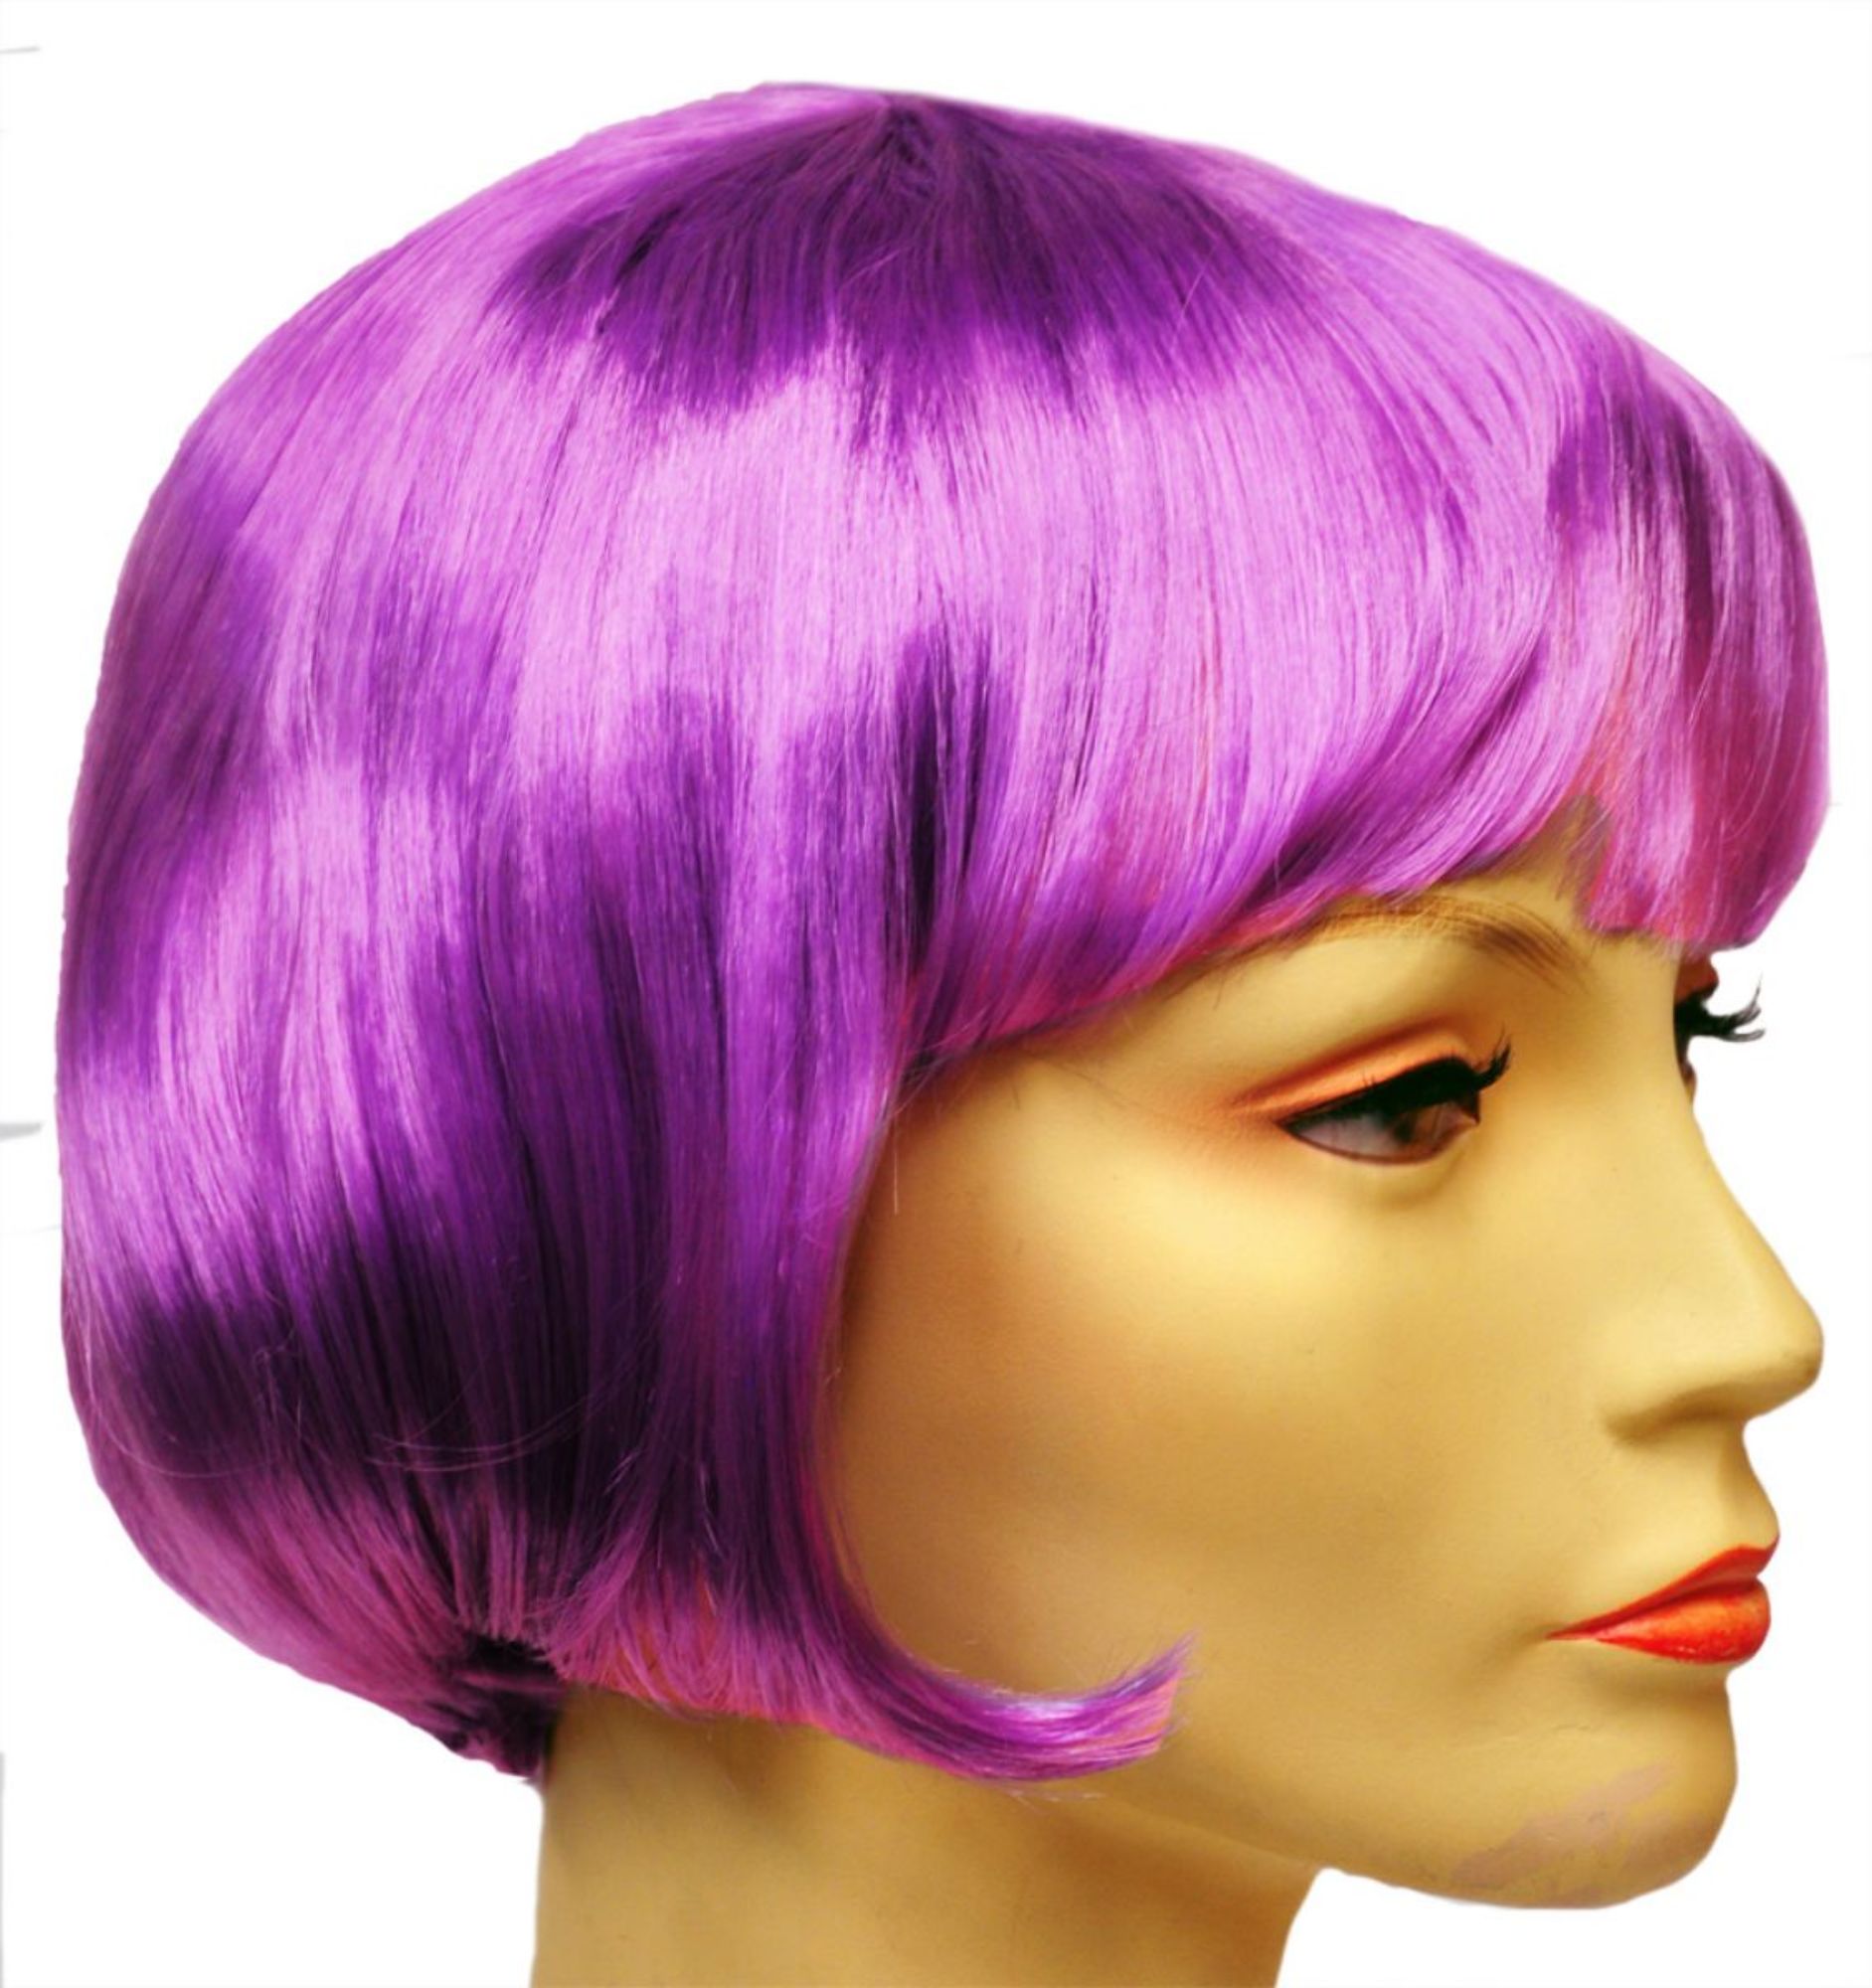 The Costume Center Light Purple Bargain Lulu Women Adult Halloween Wig Costume Accessory - One Size